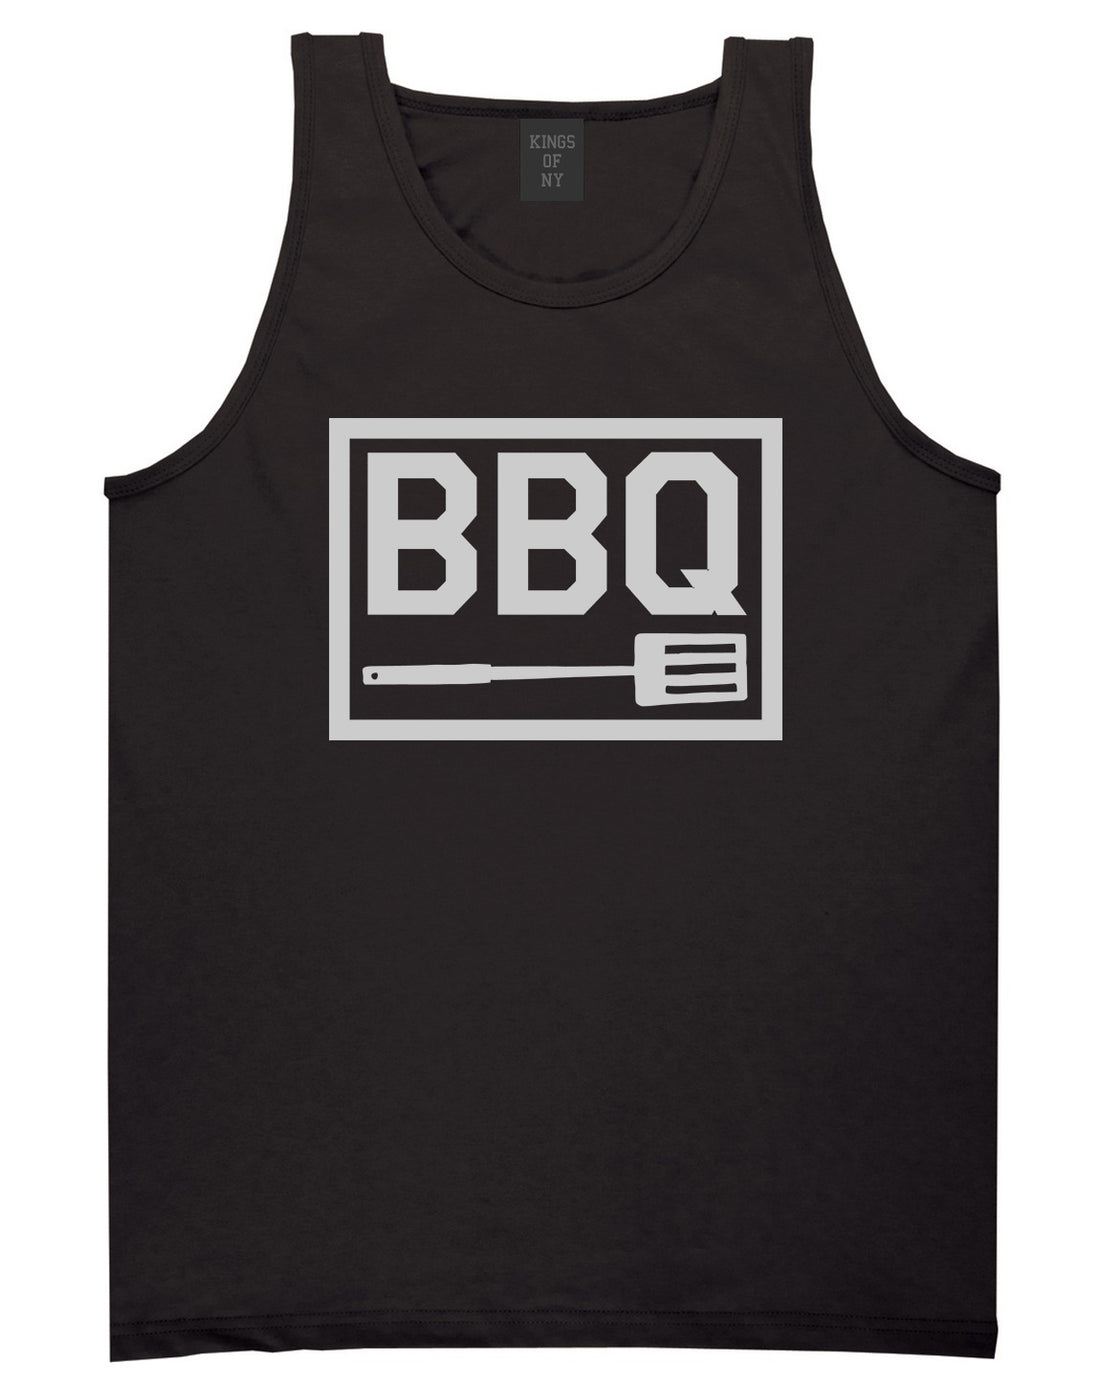 BBQ Barbecue Spatula Black Tank Top Shirt by Kings Of NY